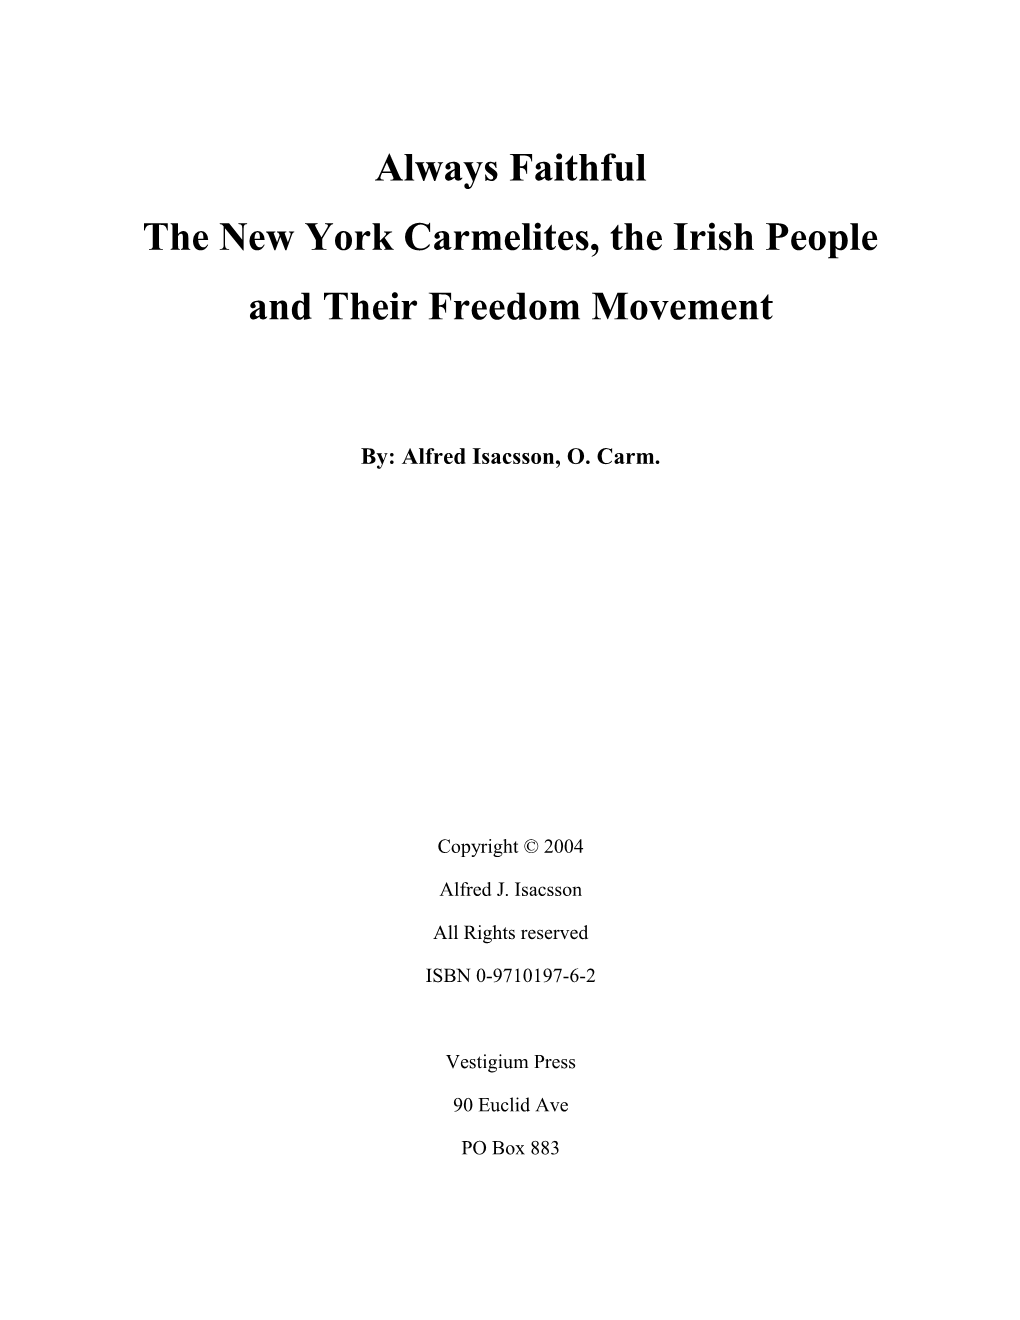 The New York Carmelites, the Irish People